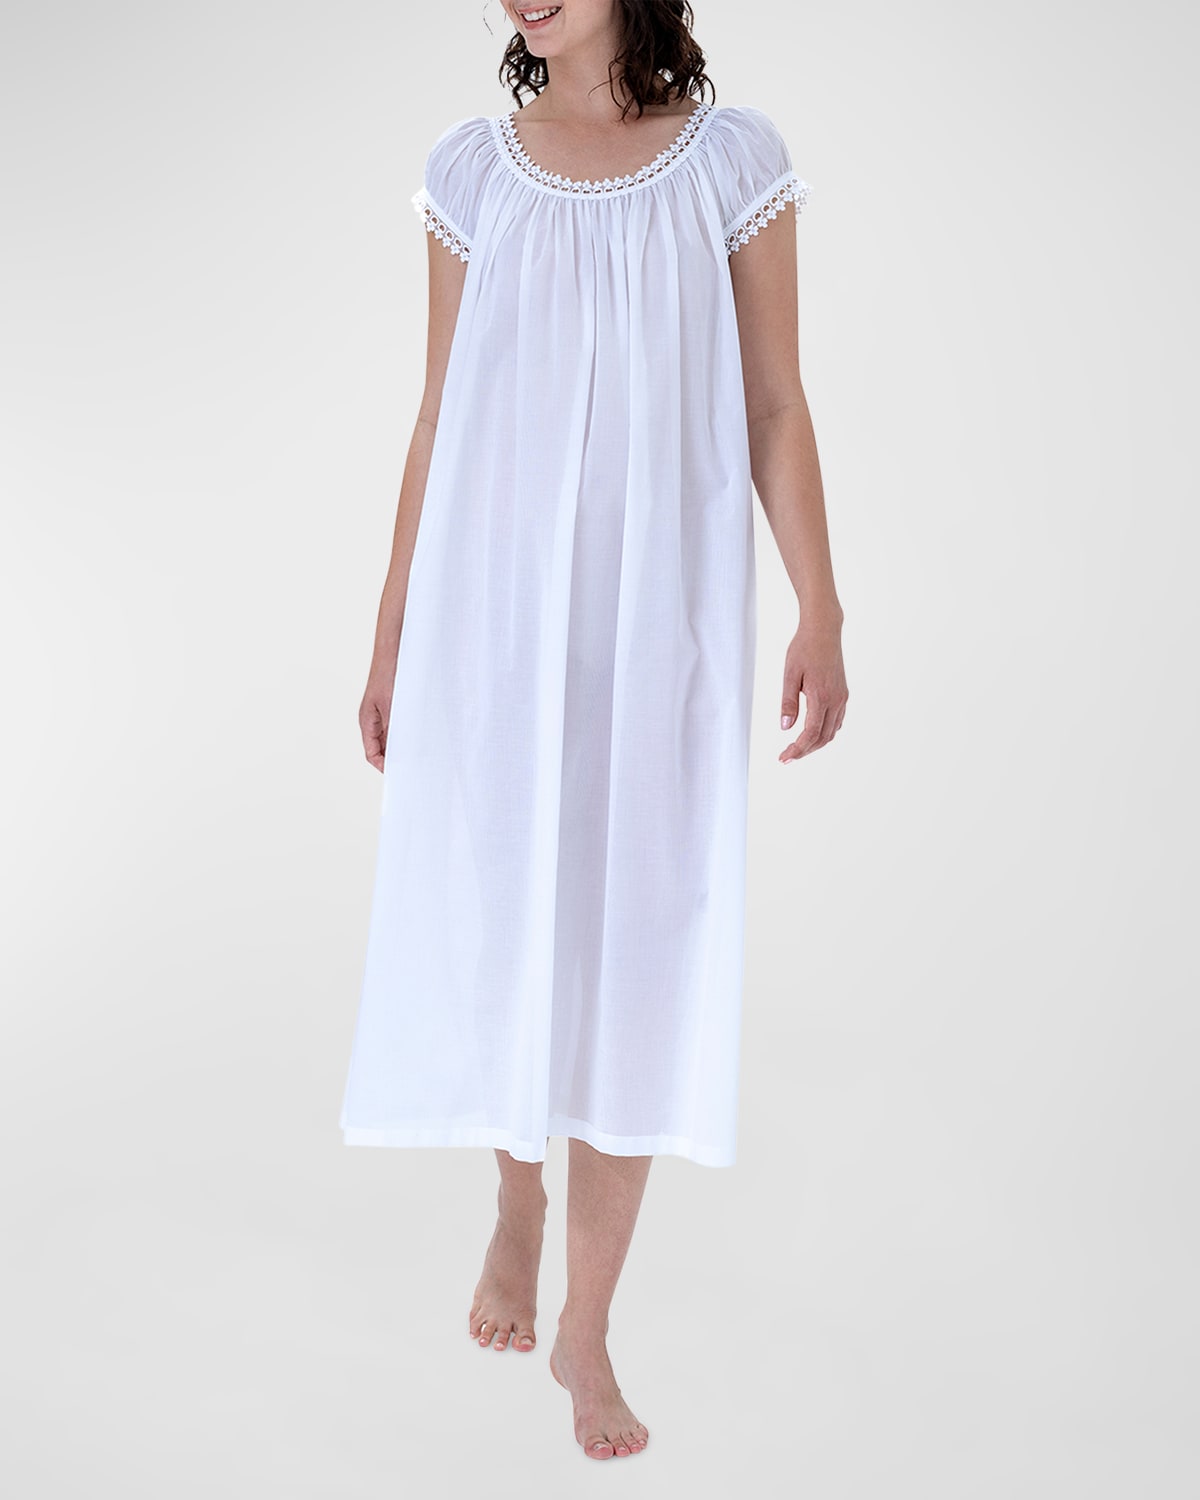 Celestine Monica-2 Ruched Lace-trim Cotton Nightgown In White